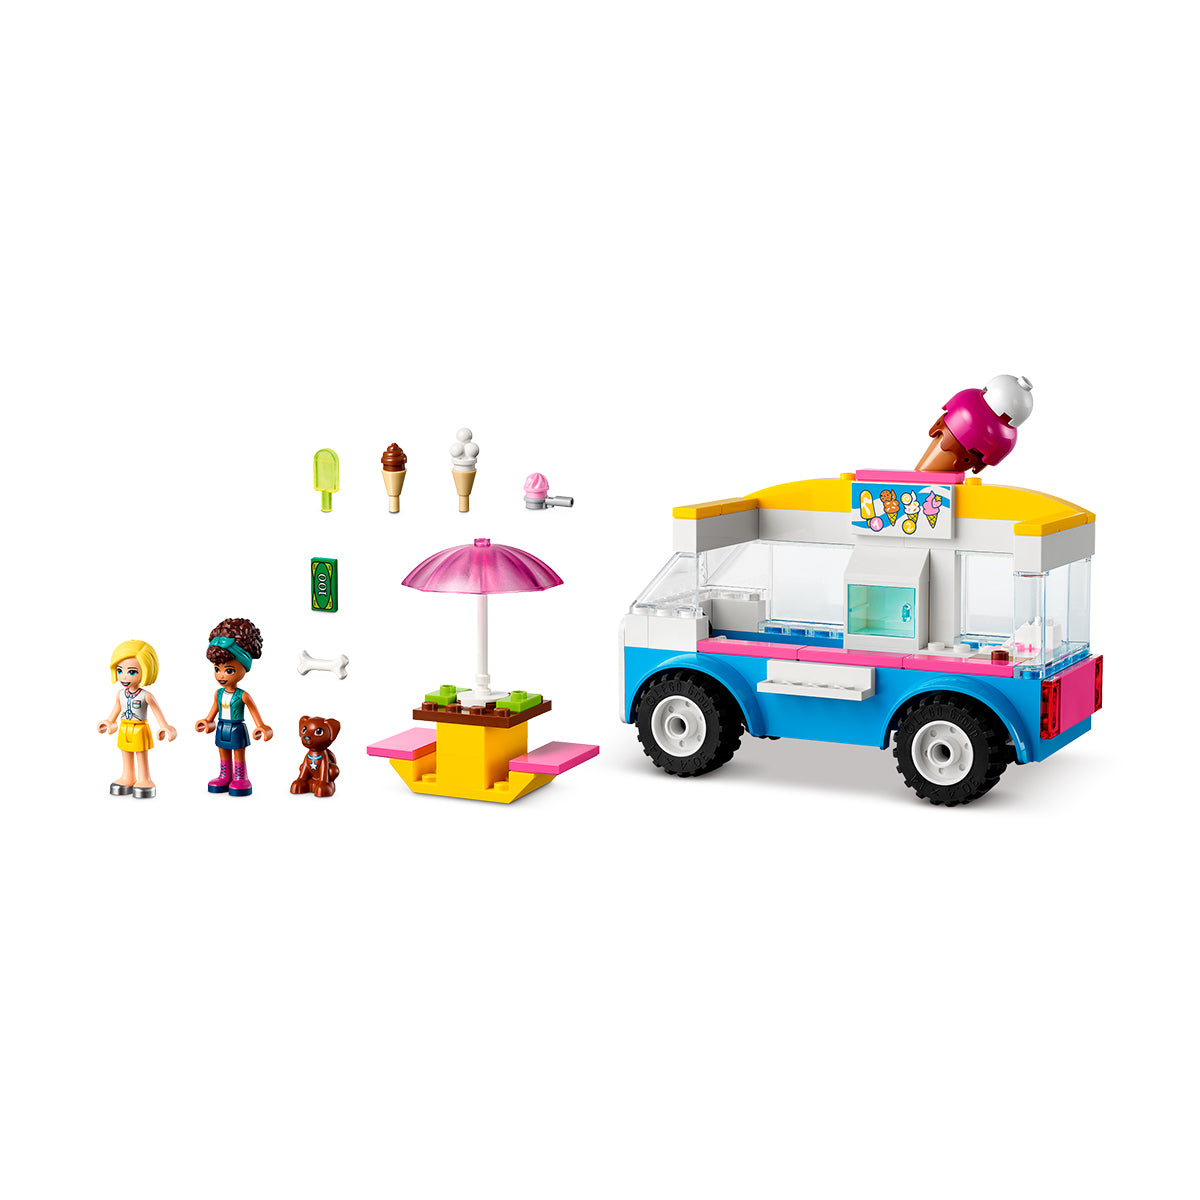 LEGO Friends - Ice-Cream Truck 41715